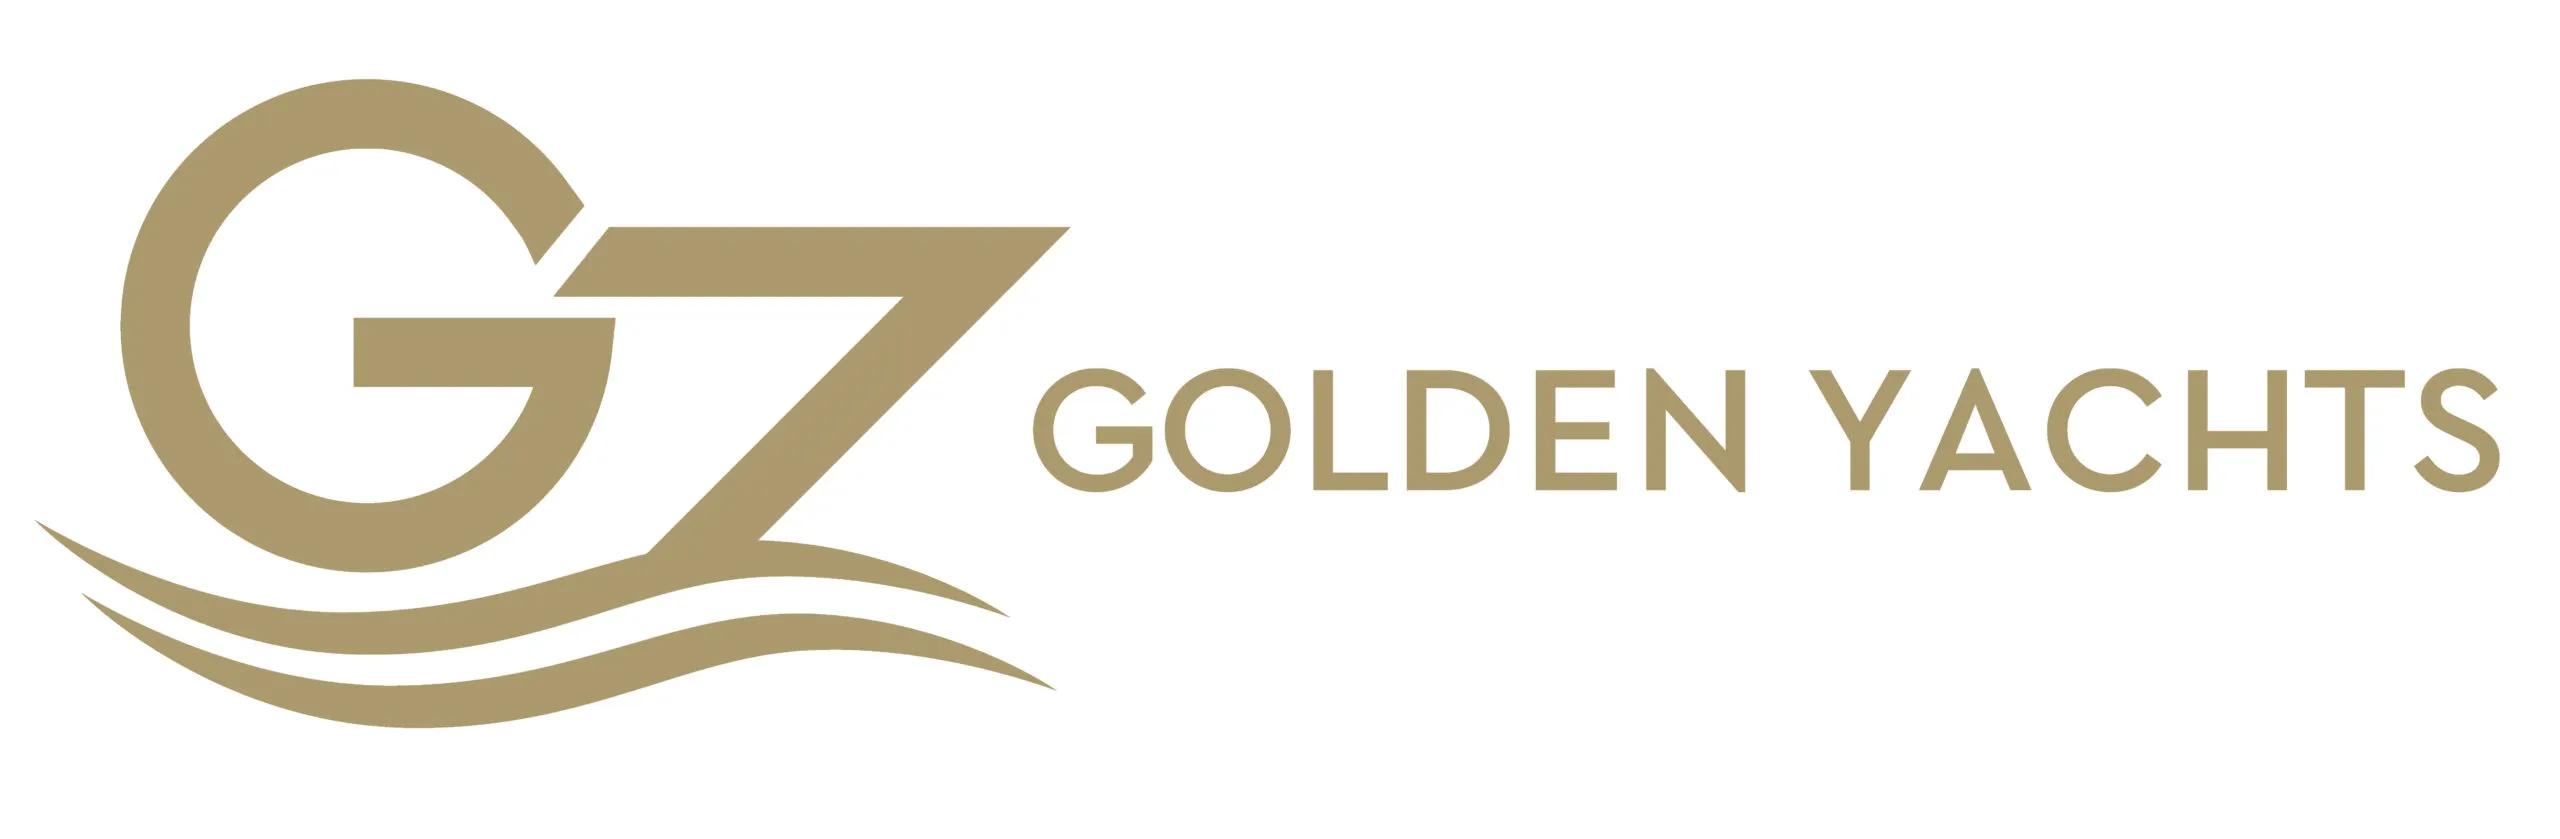 Golden Yachts logo